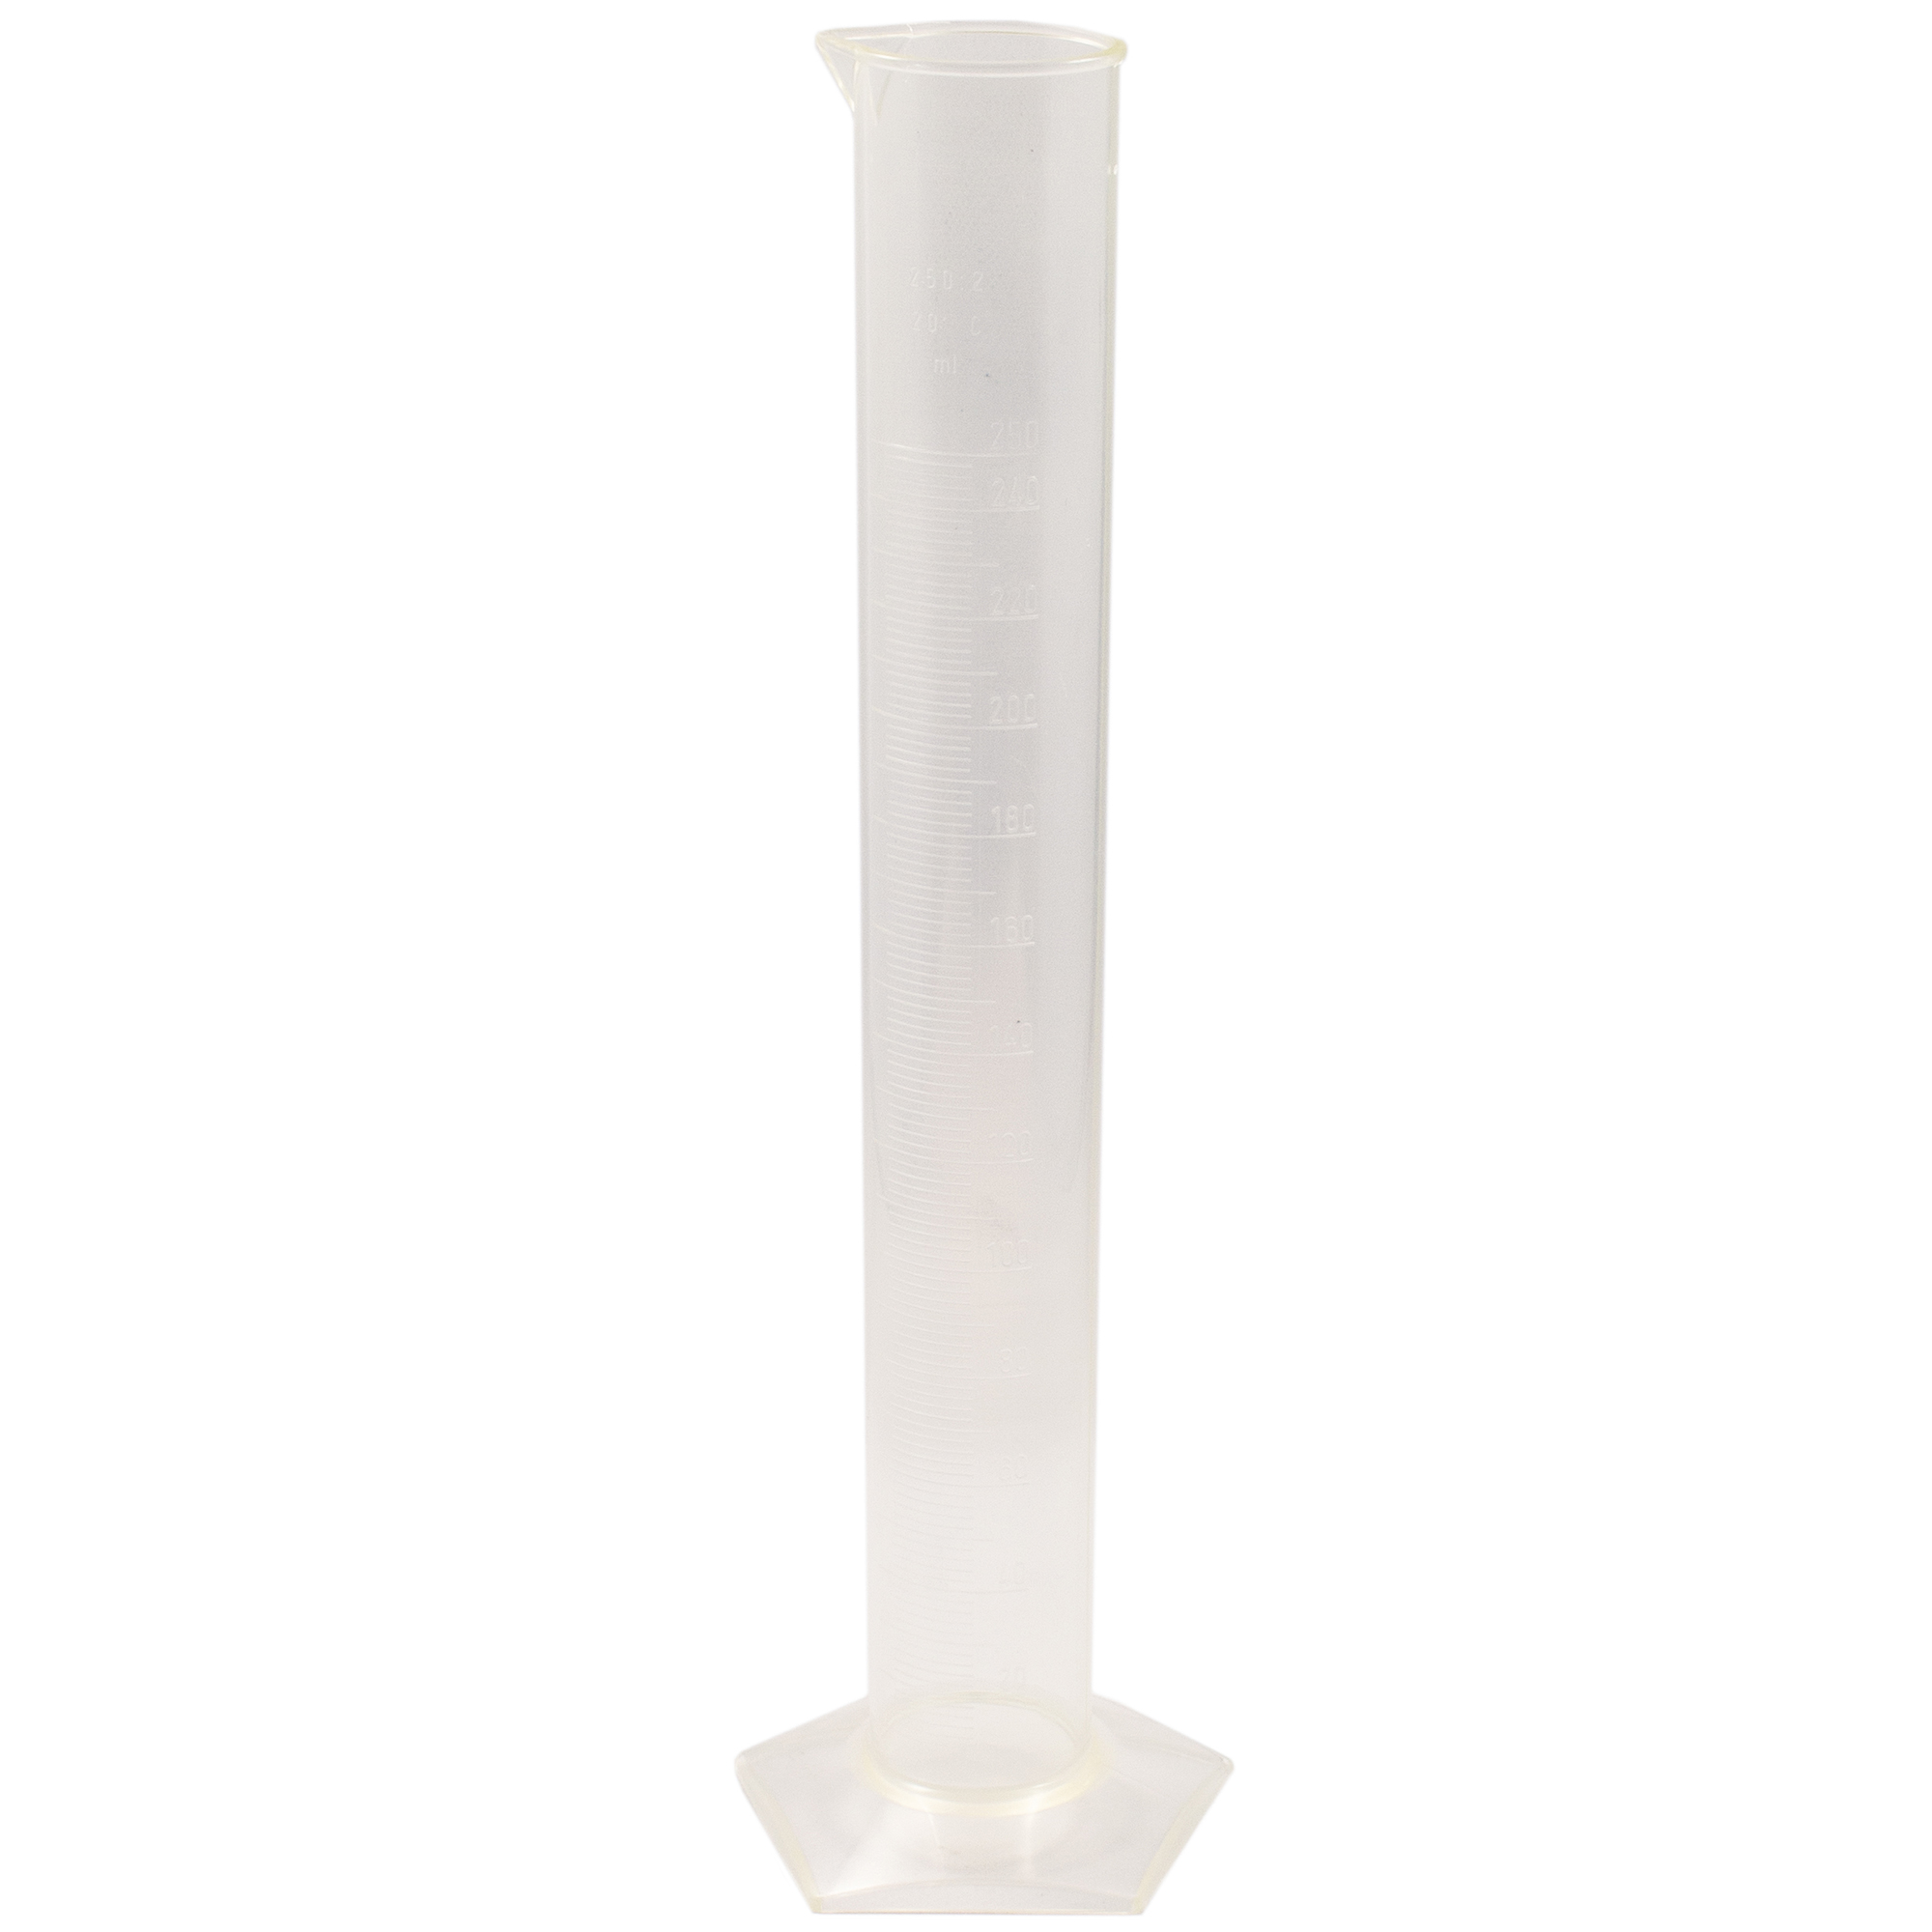 Measuring cylinder plastic (tpx) - 250ml